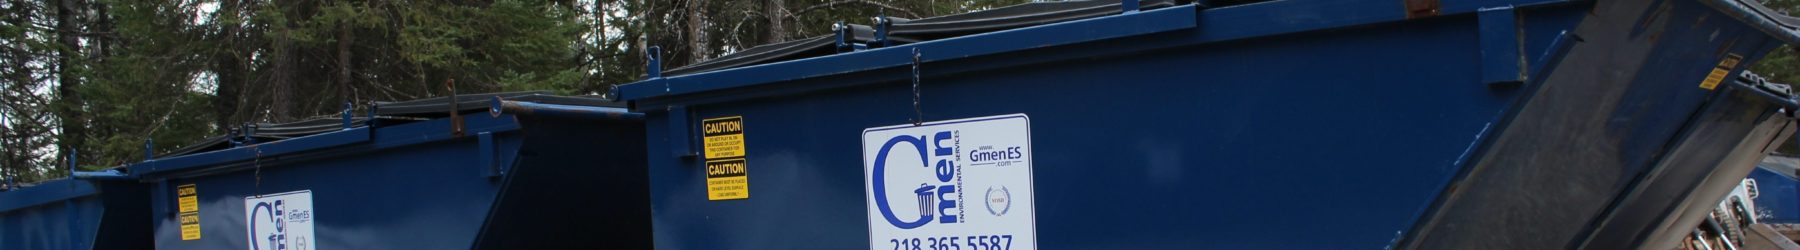 G-Men Environmental Services | Northeastern Minnesota Waste Removal